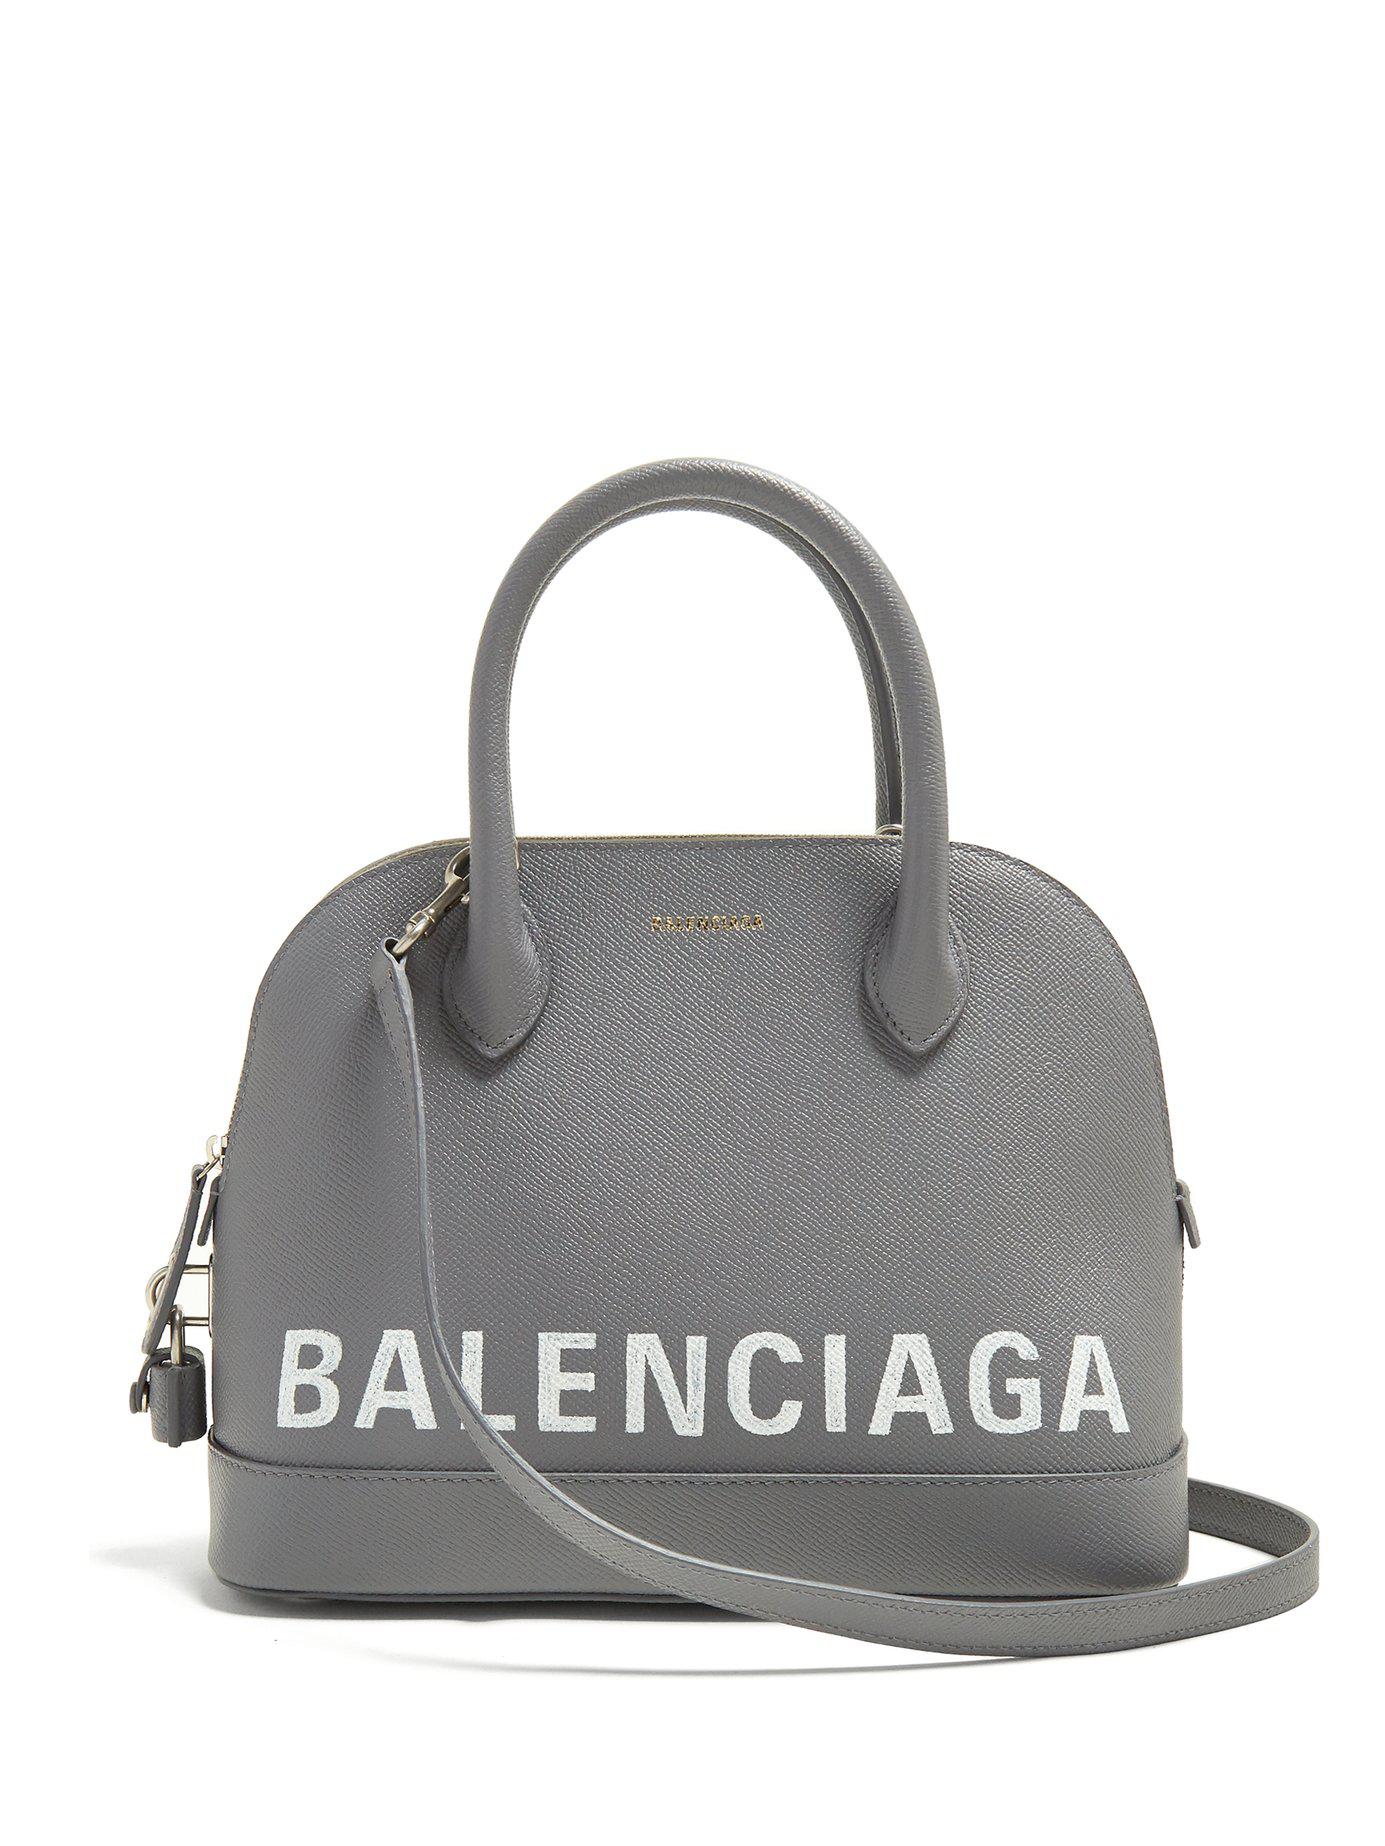 Balenciaga Ville S Leather Bag in Light Grey (Gray) | Lyst